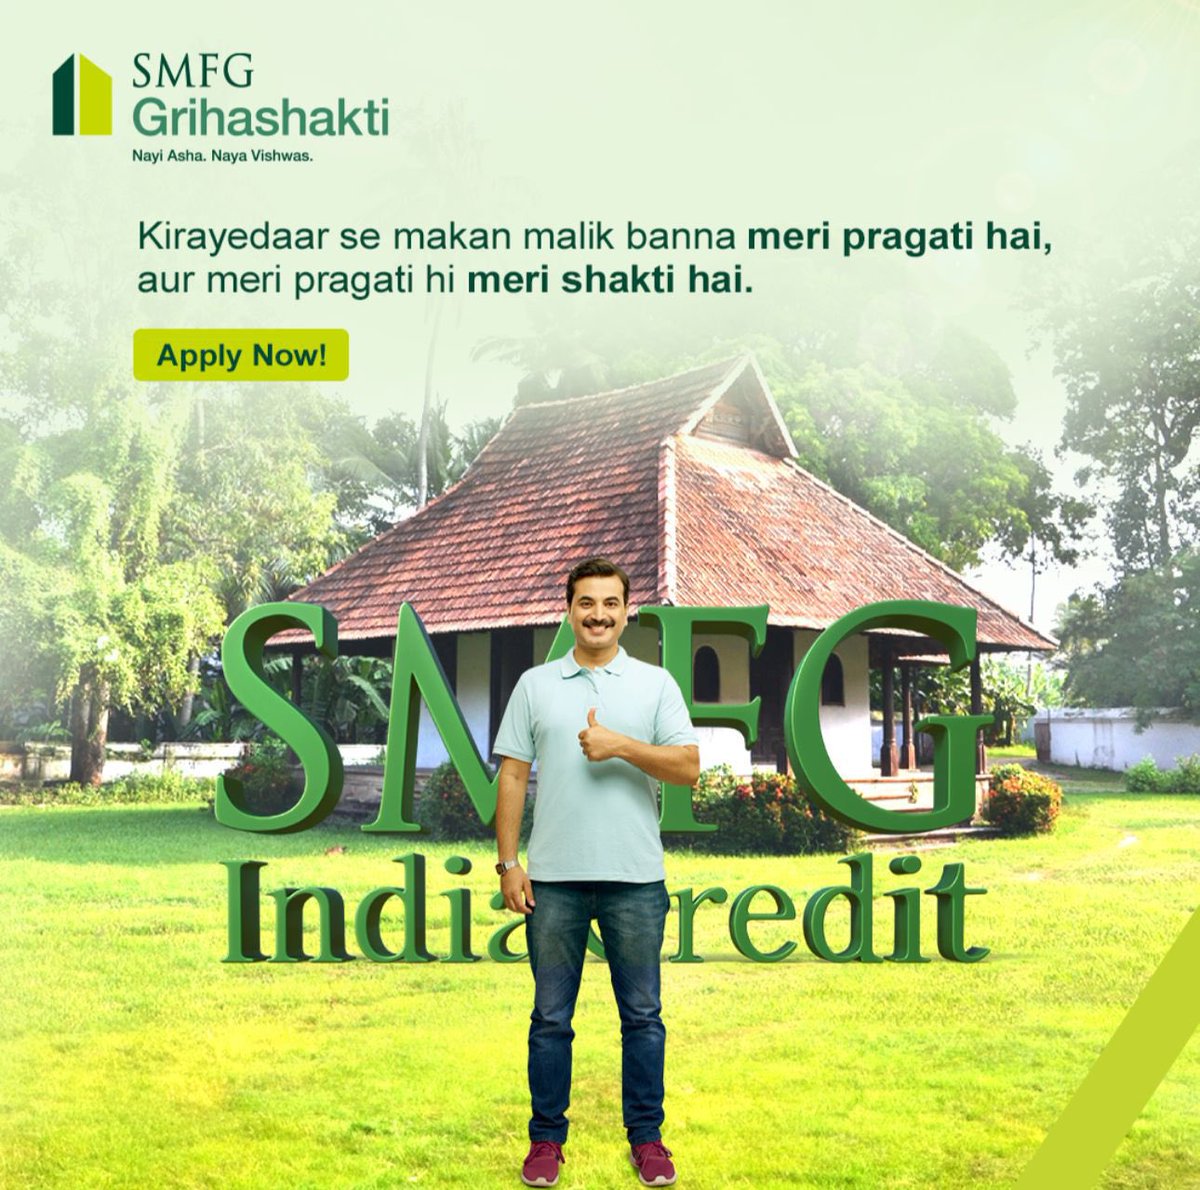 Fulfill your dream of owning your home with home loans from SMFG Grihashakti Apply now!

#SMFGGrihashakti #Homeloans #PragatiHiNayiShaktiHai